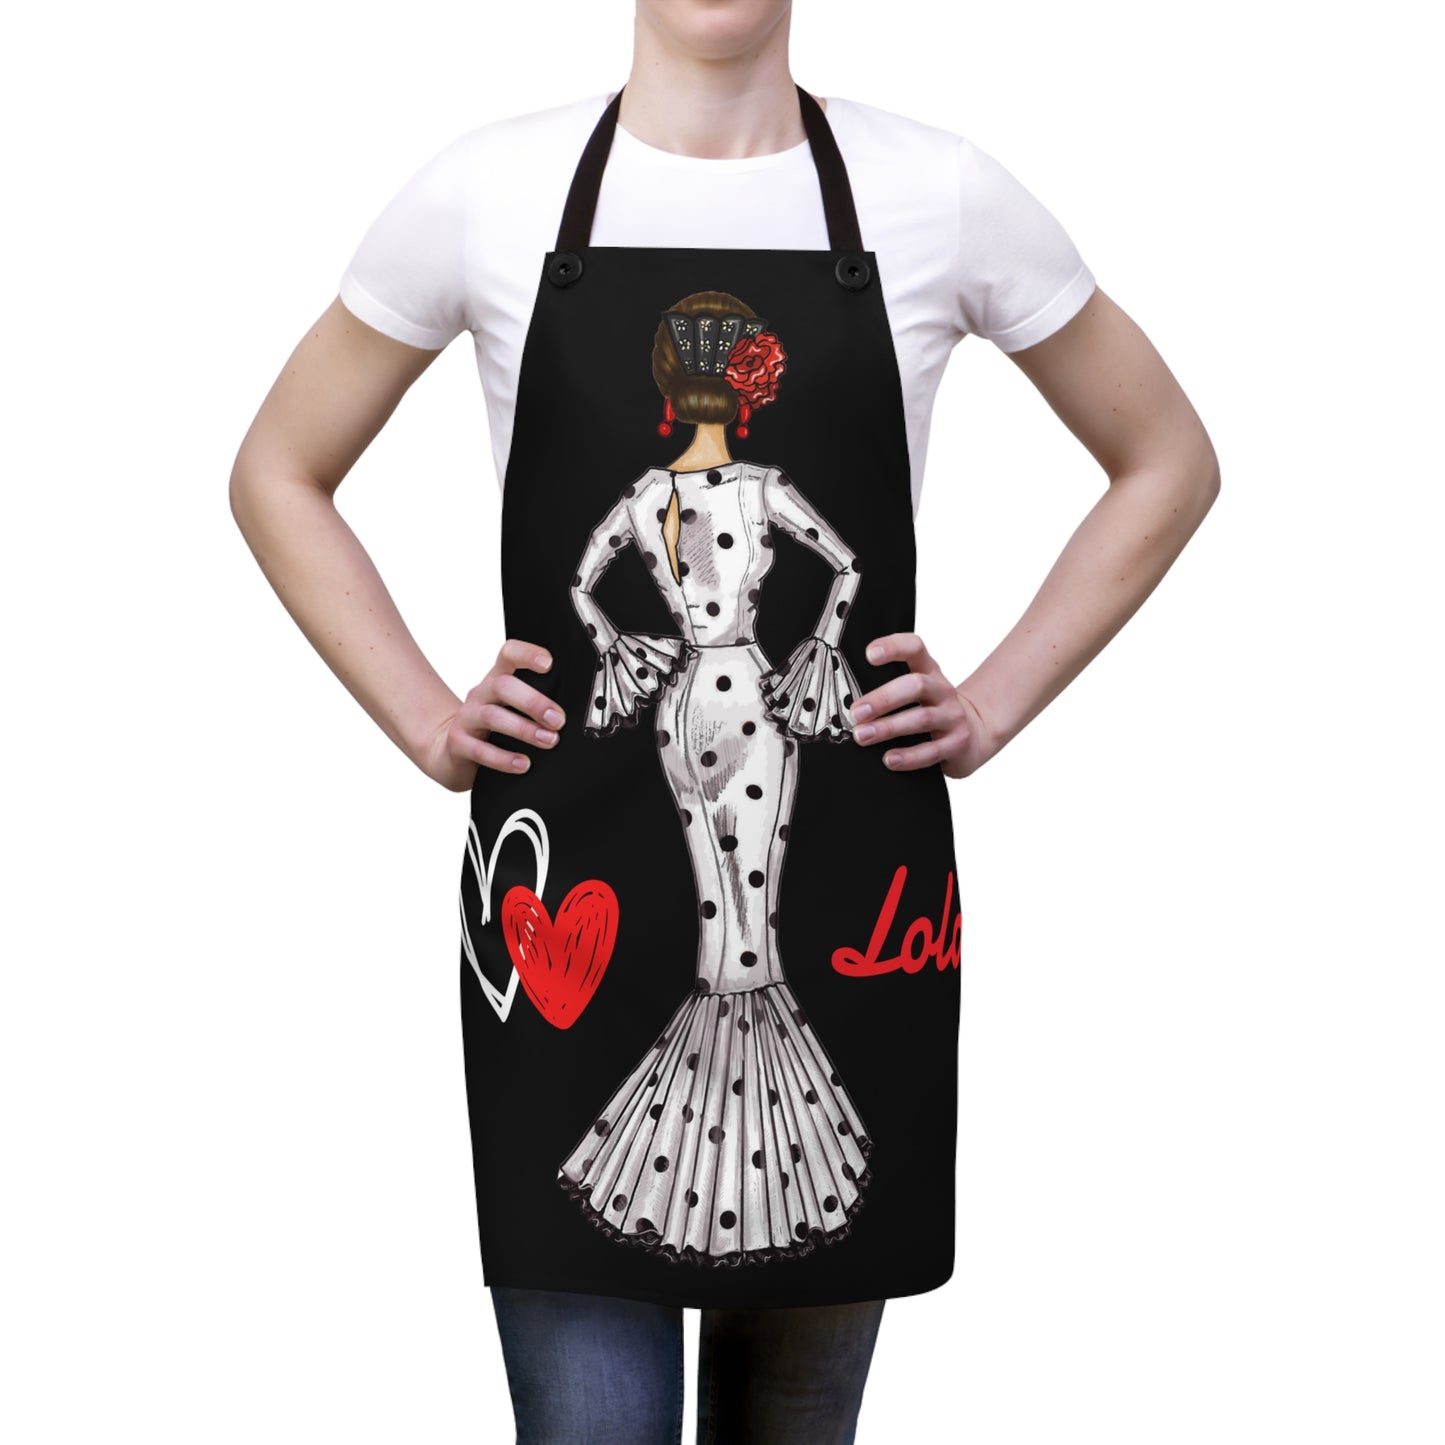 a woman wearing a black apron with a dalmatian design